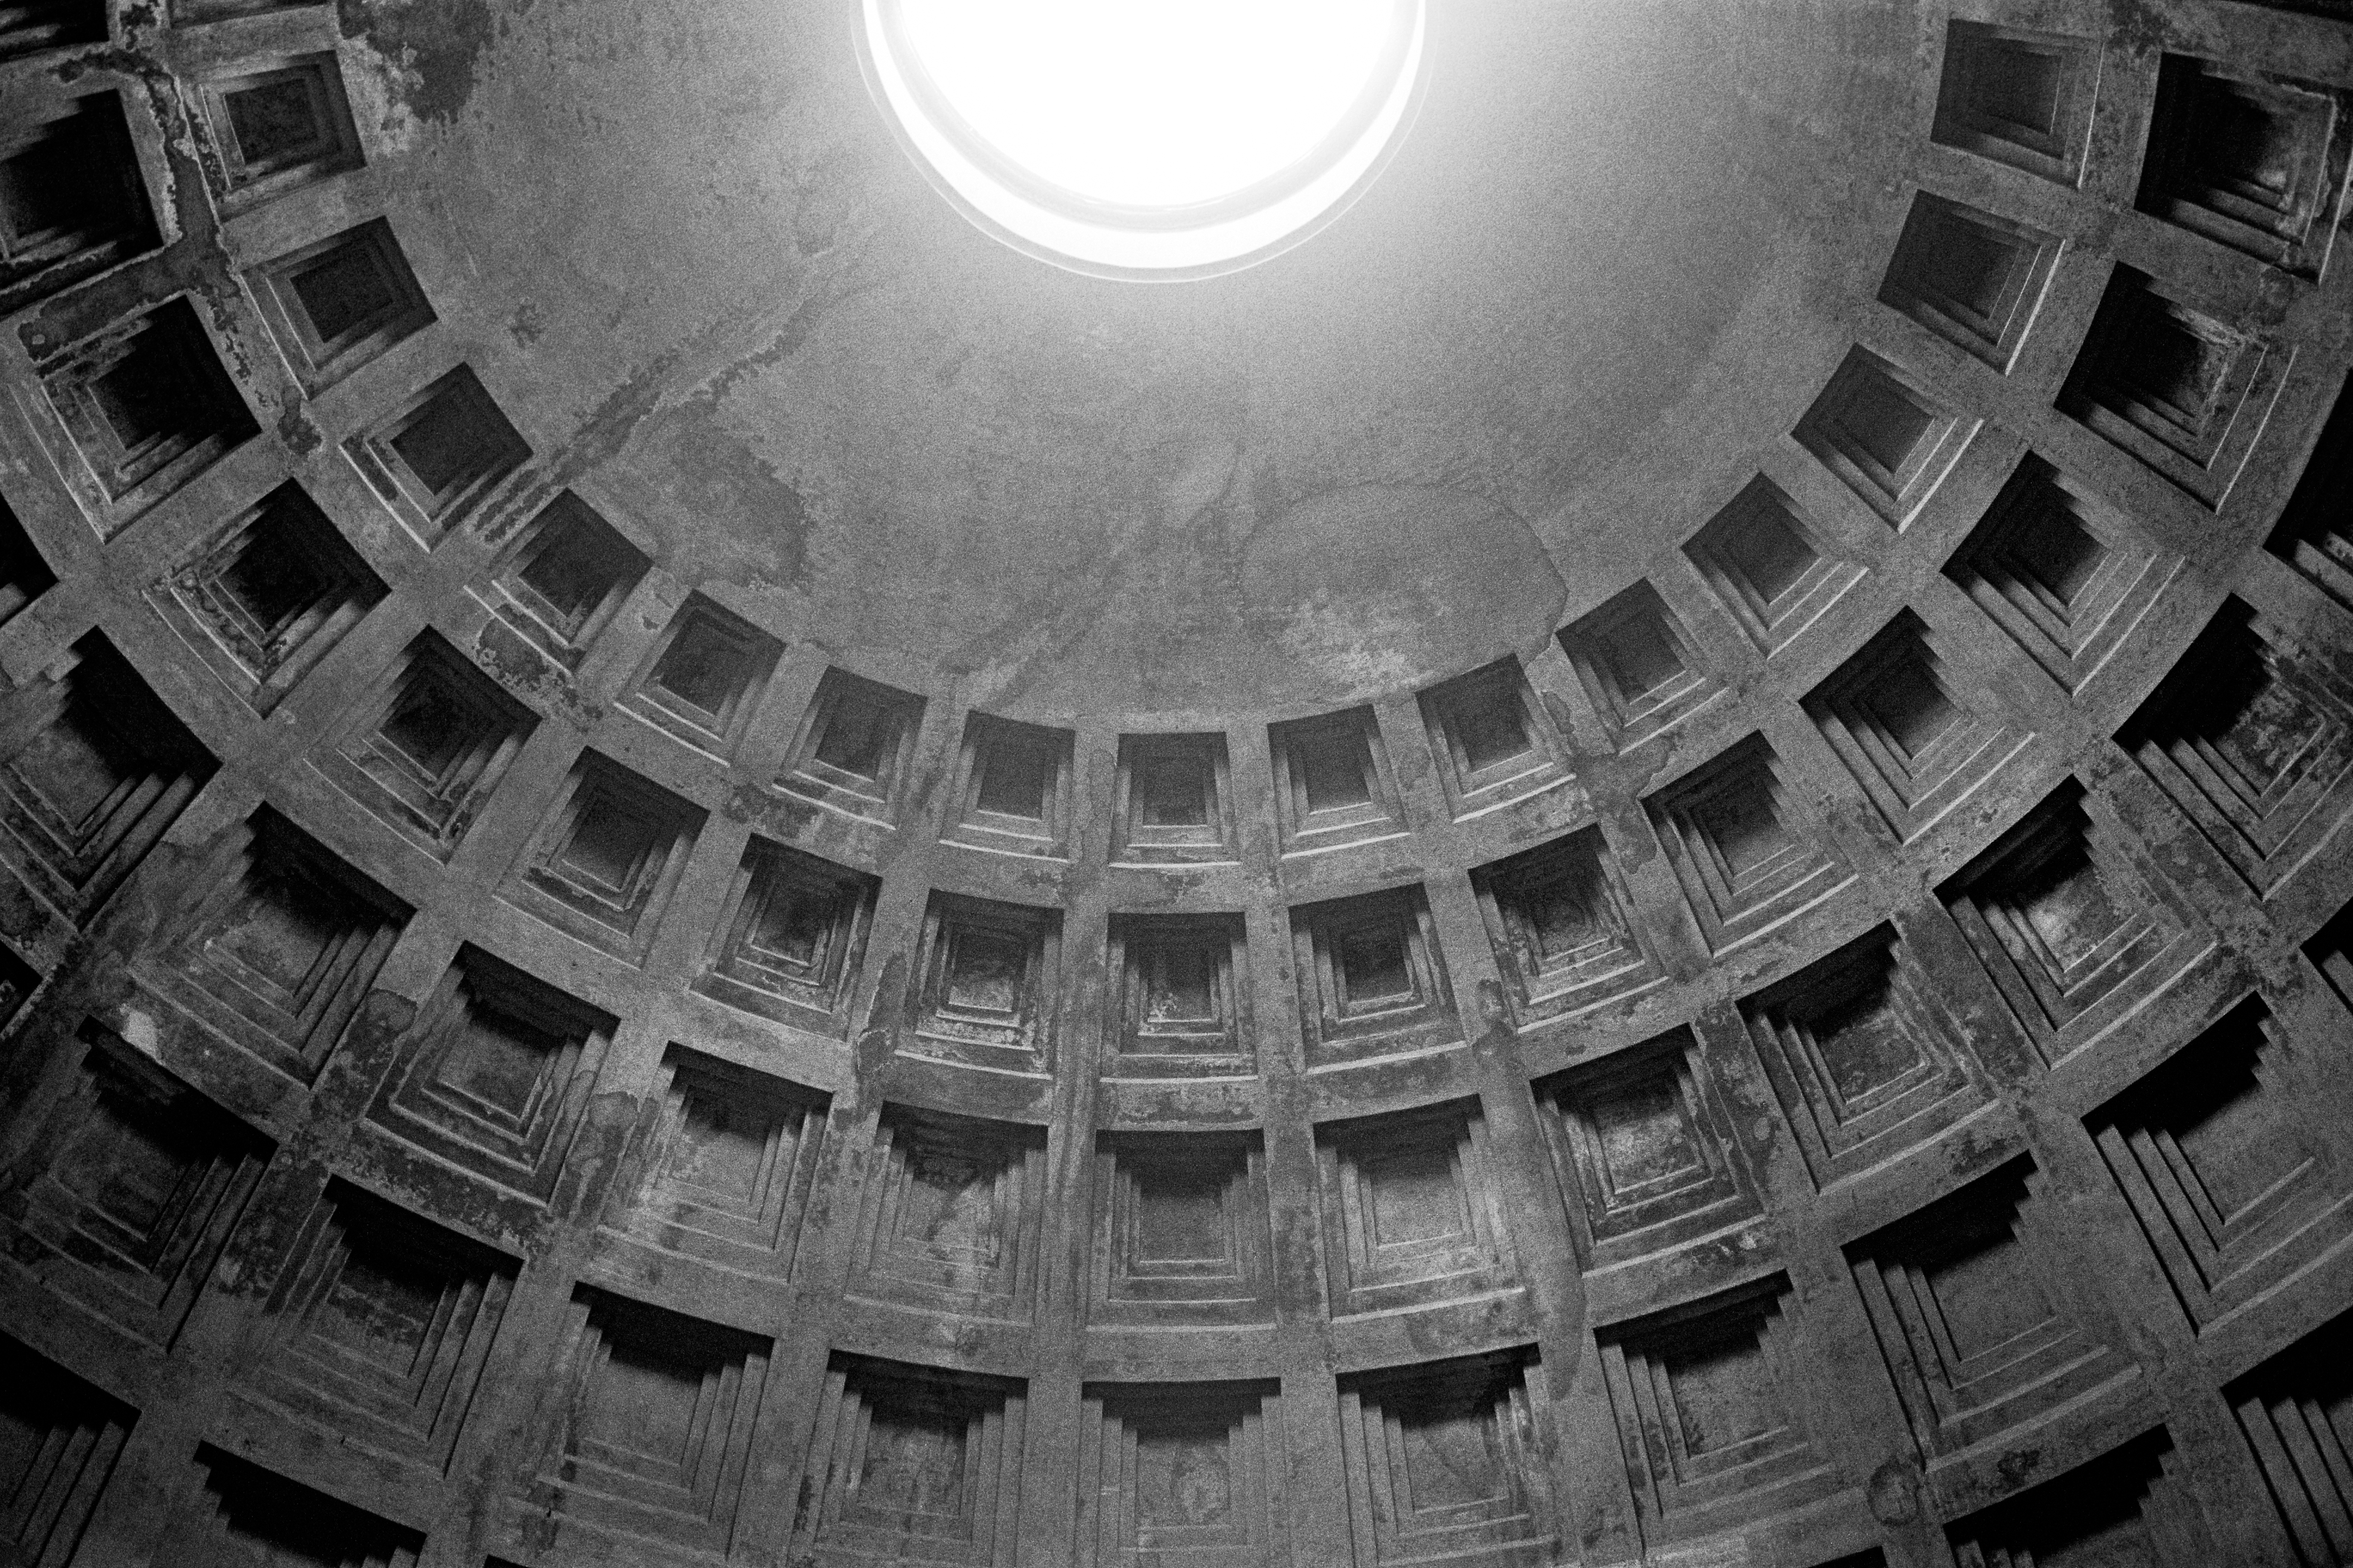 2002 Rome Pantheon ceiling oculus